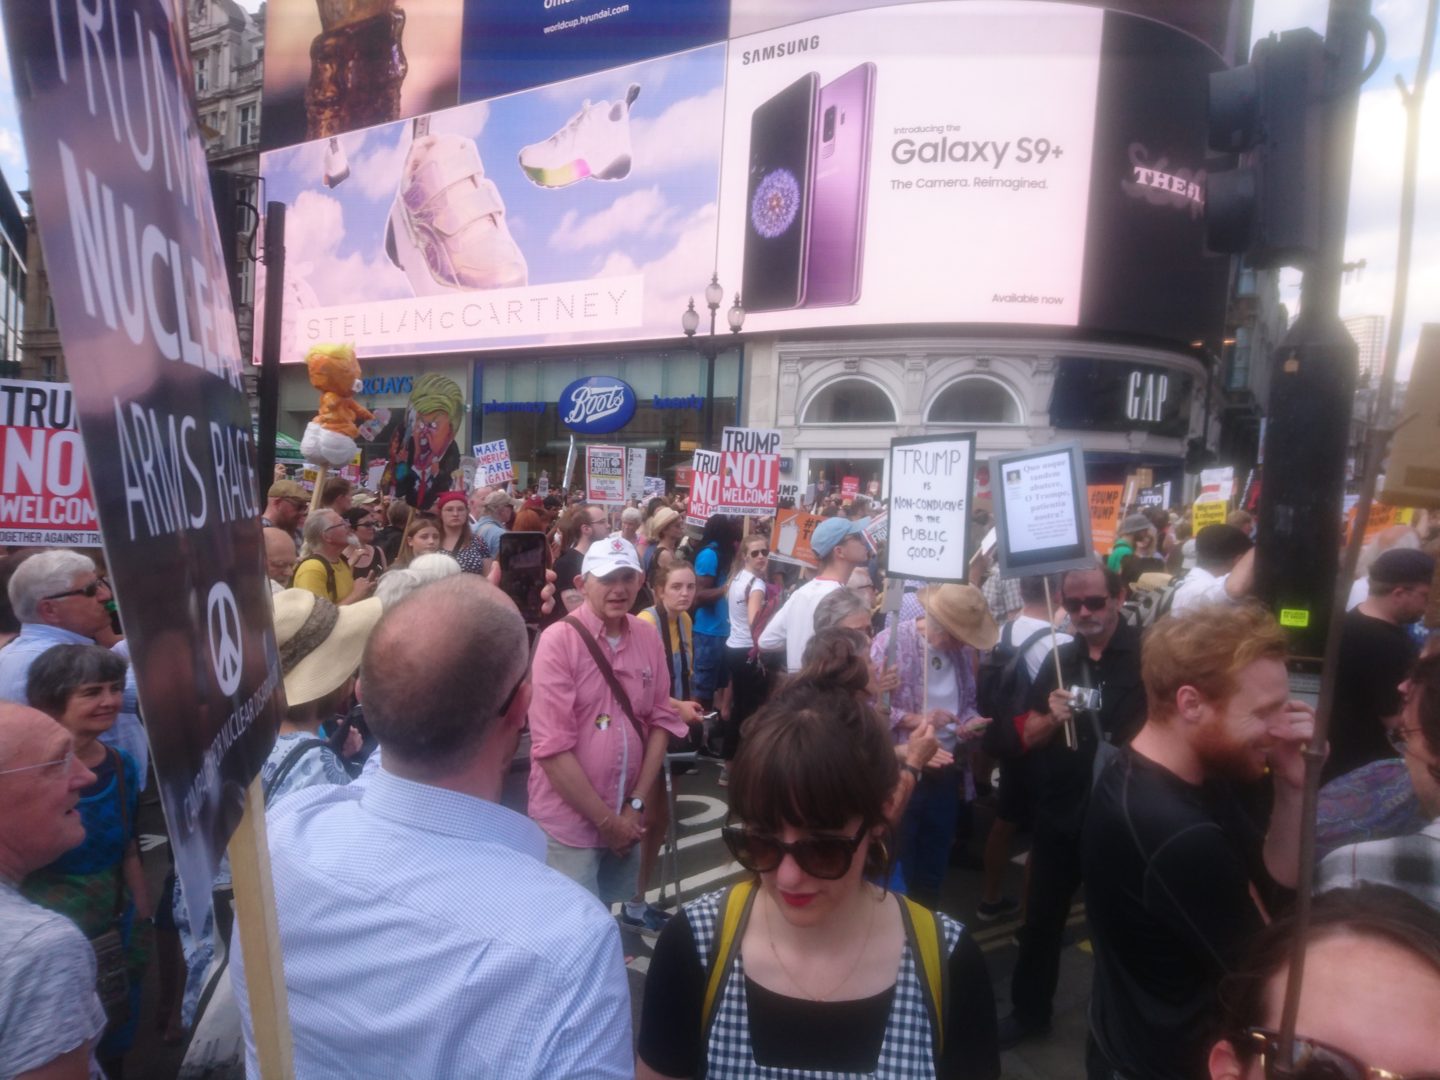 London anti-Trump protest